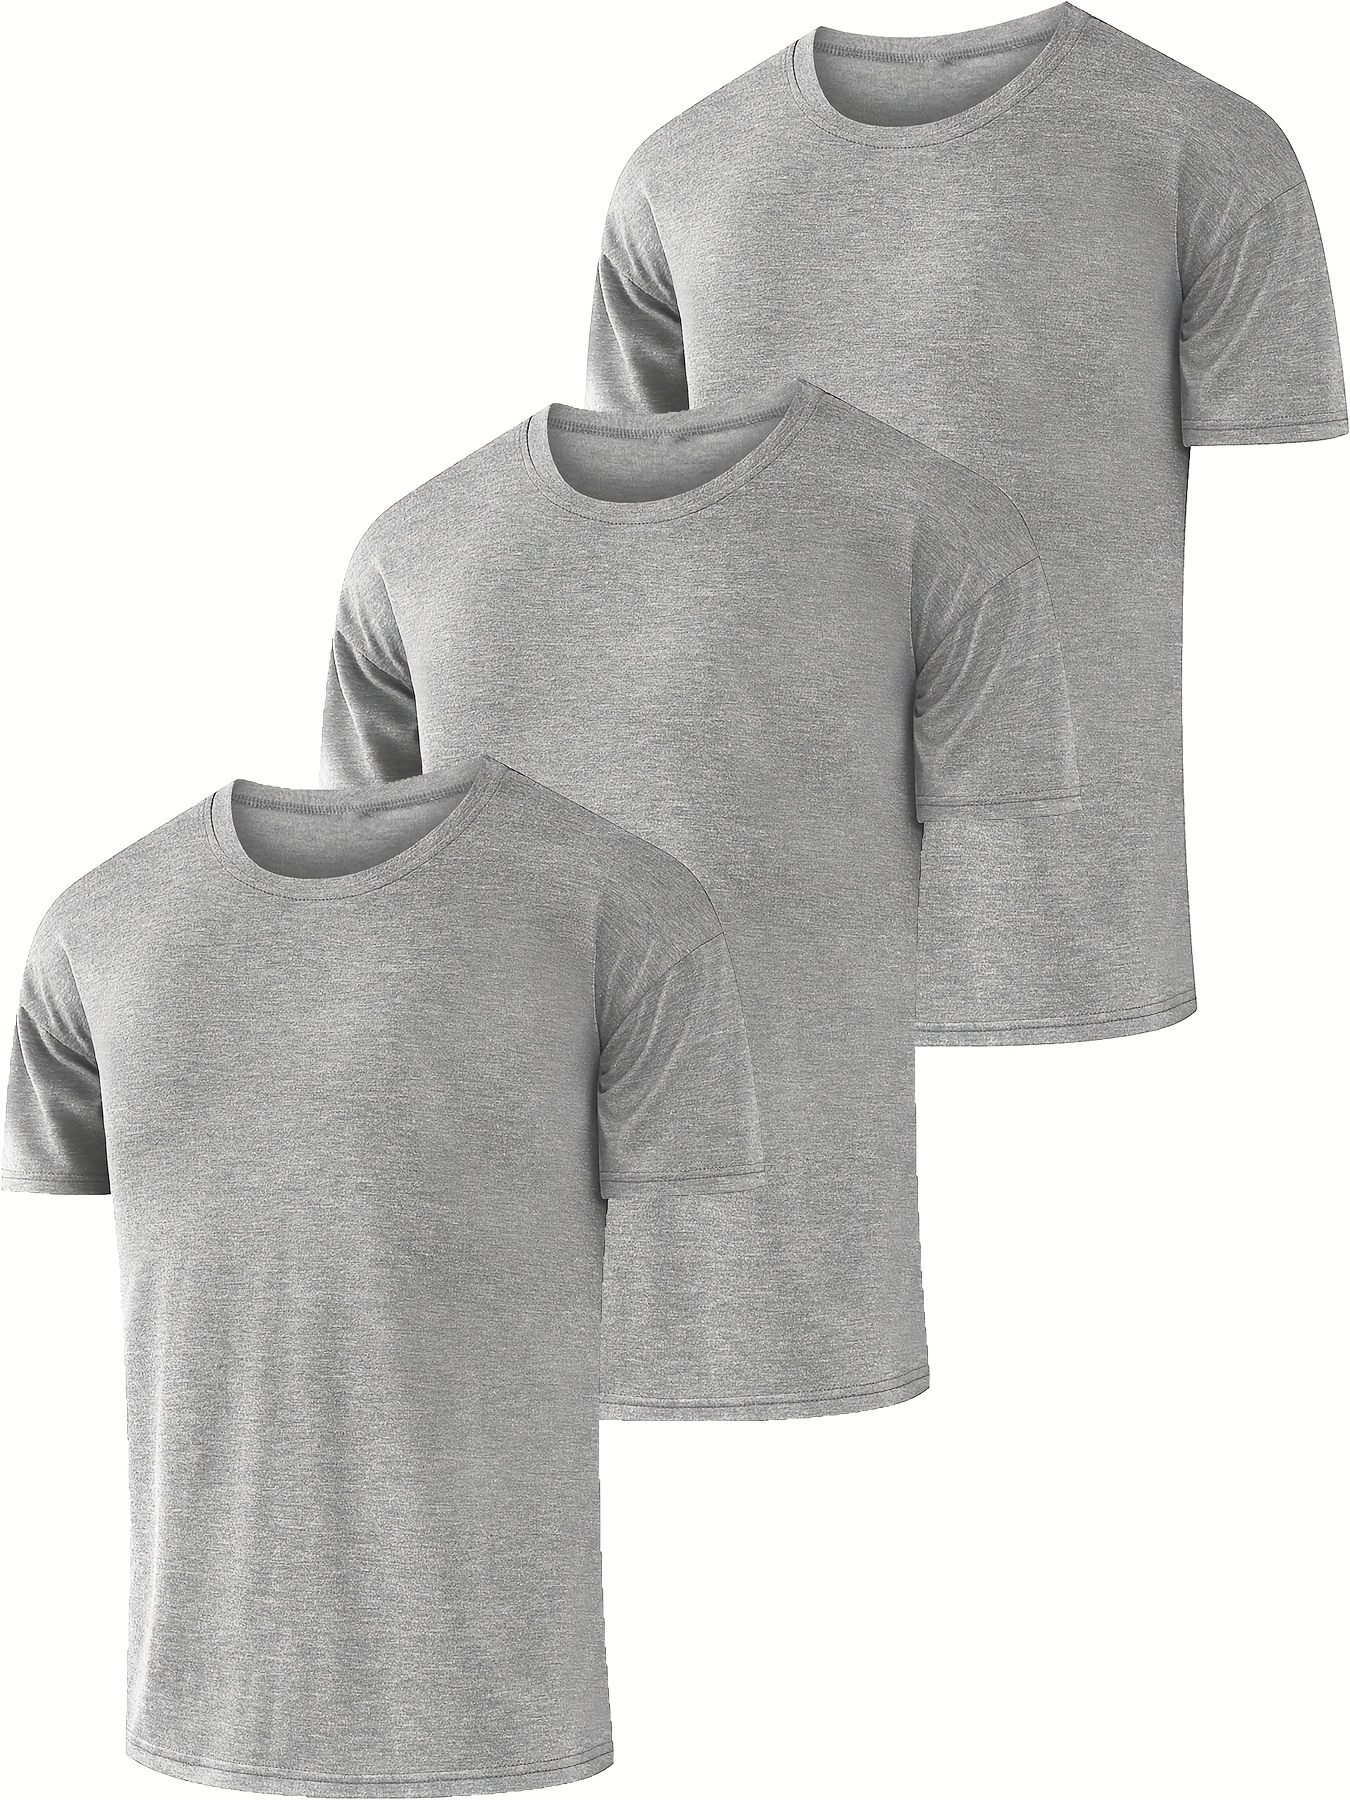 Men's Basic T Shirt Short Sleeve Solid Black Crew Neck Casual